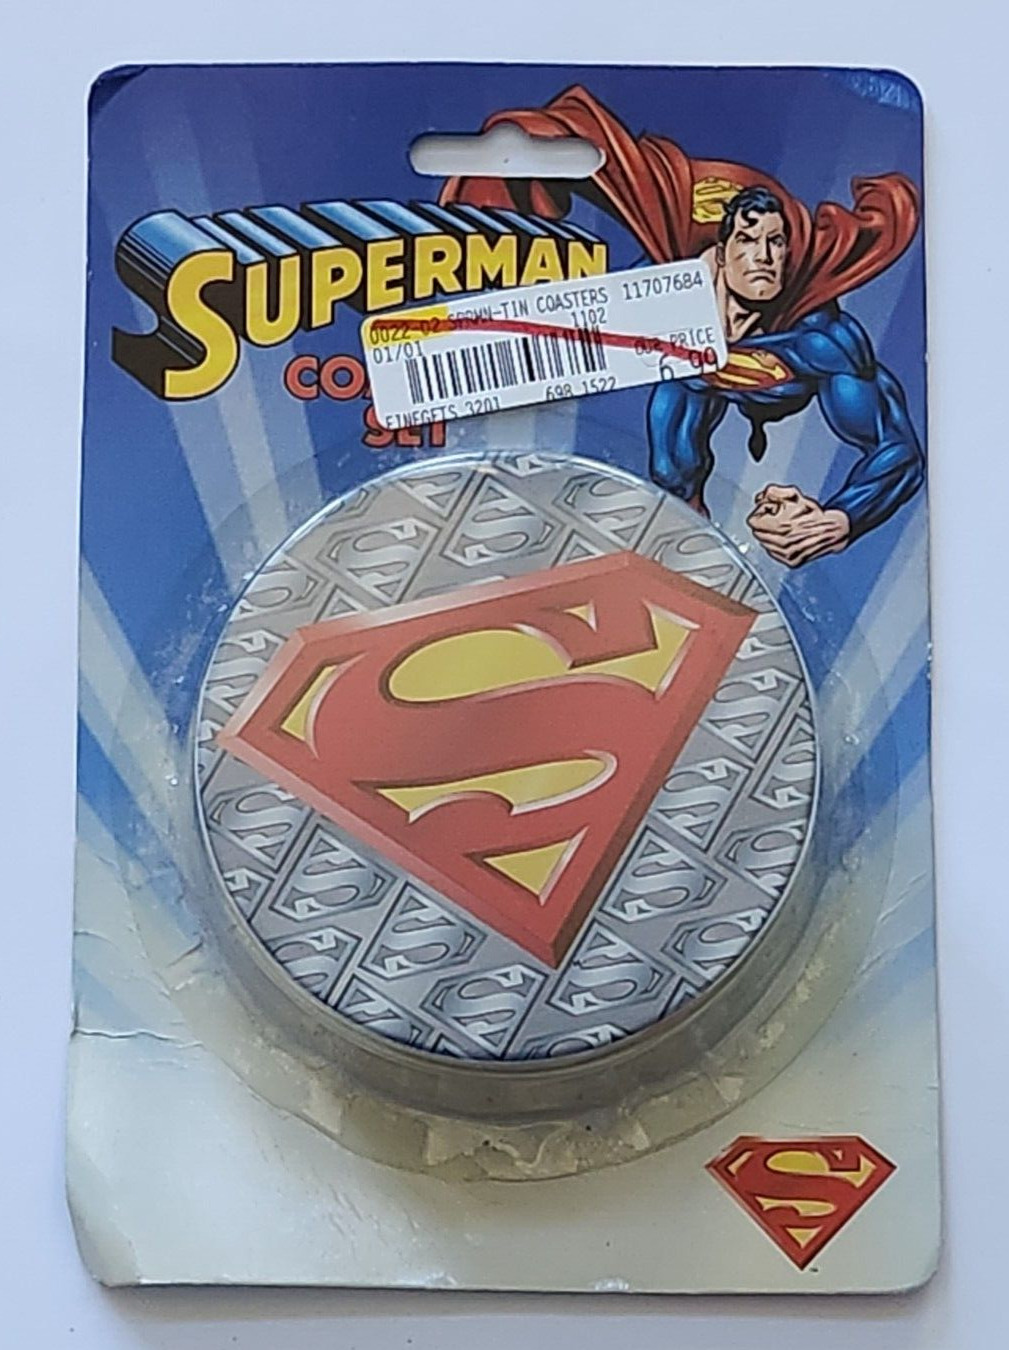 WB SUPERMAN ROUND COASTER SET by DC COMICS